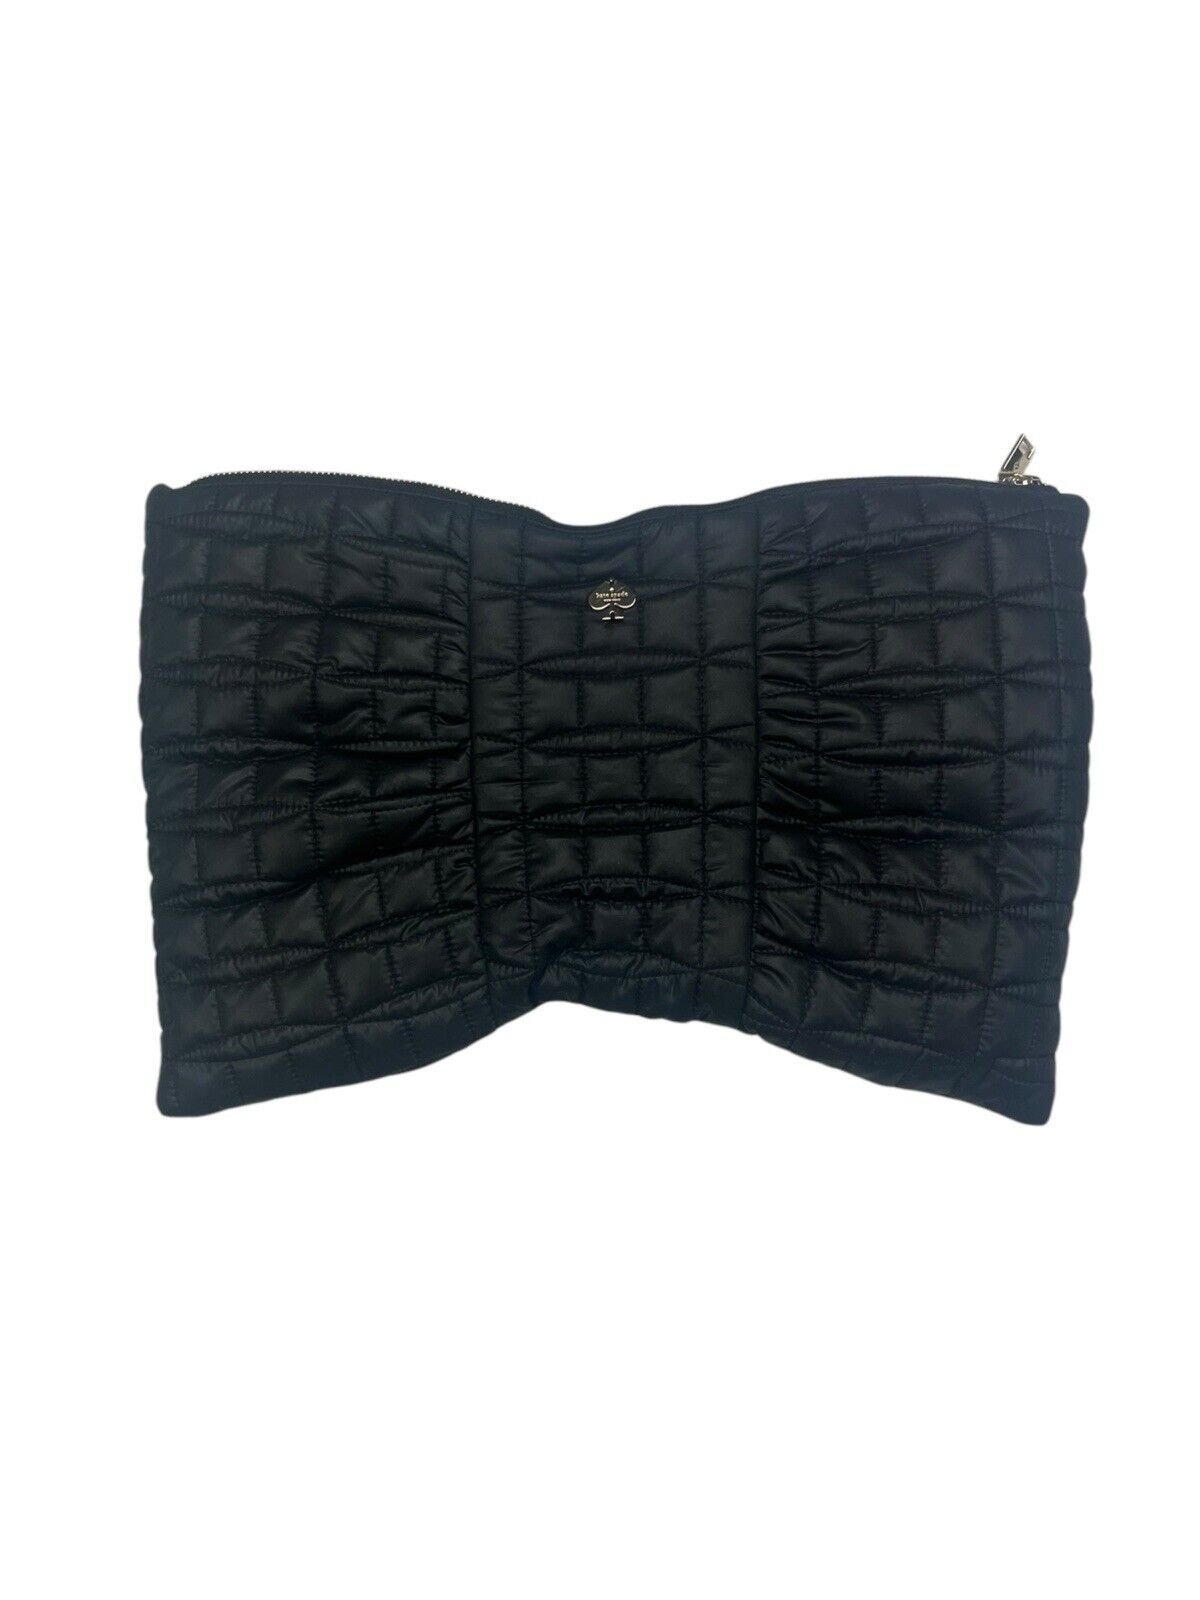 KATE SPADE Puffer Bow Handbag Gold Label Purse Black EUC - ThreadOwl